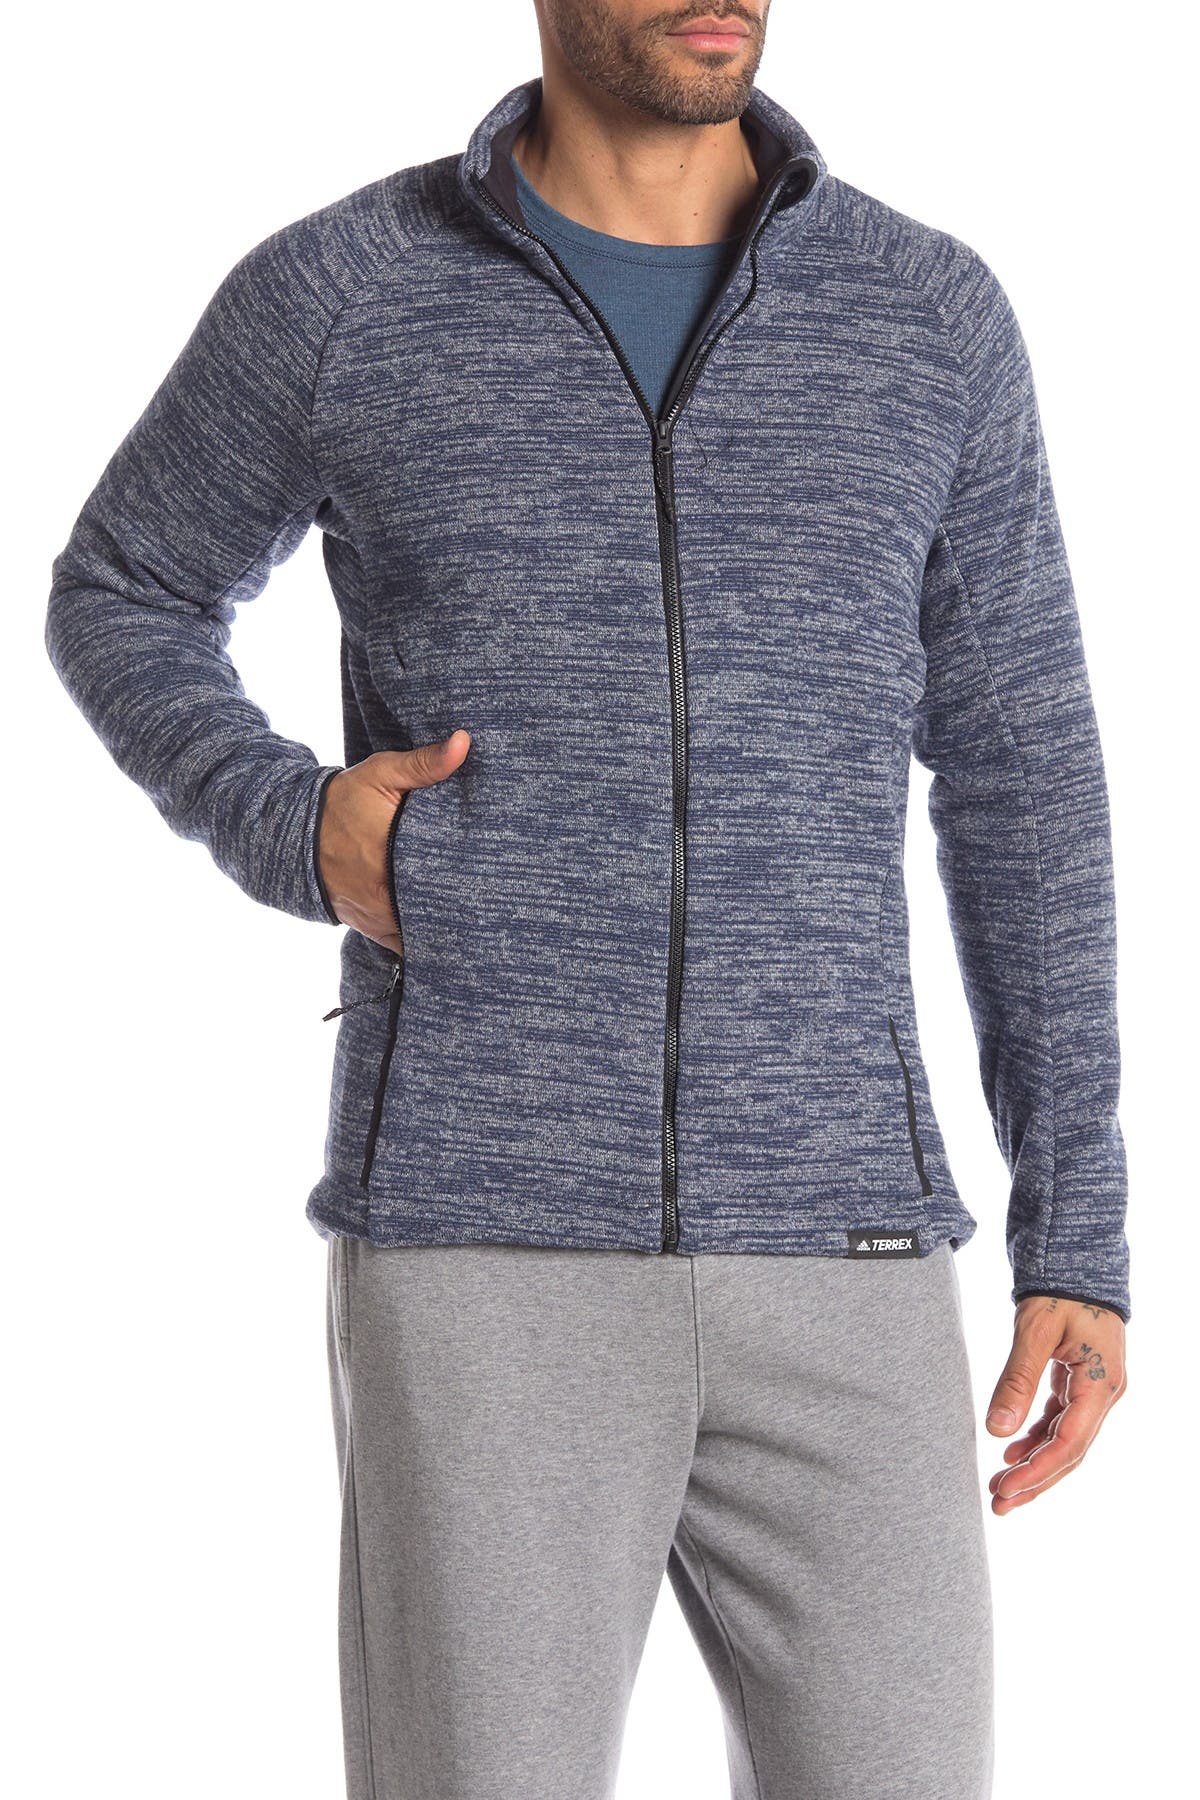 adidas knit fleece jacket